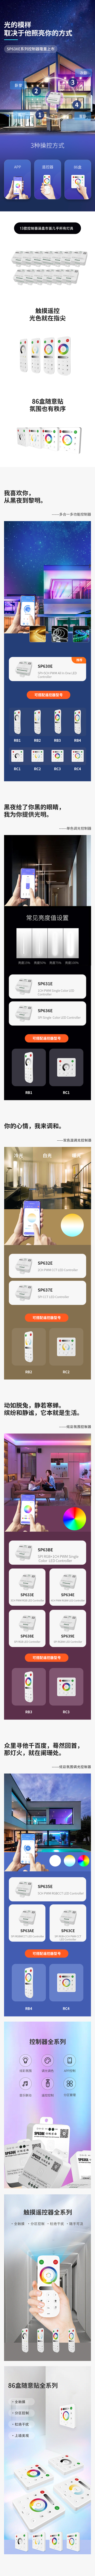 sp series led controller.jpg